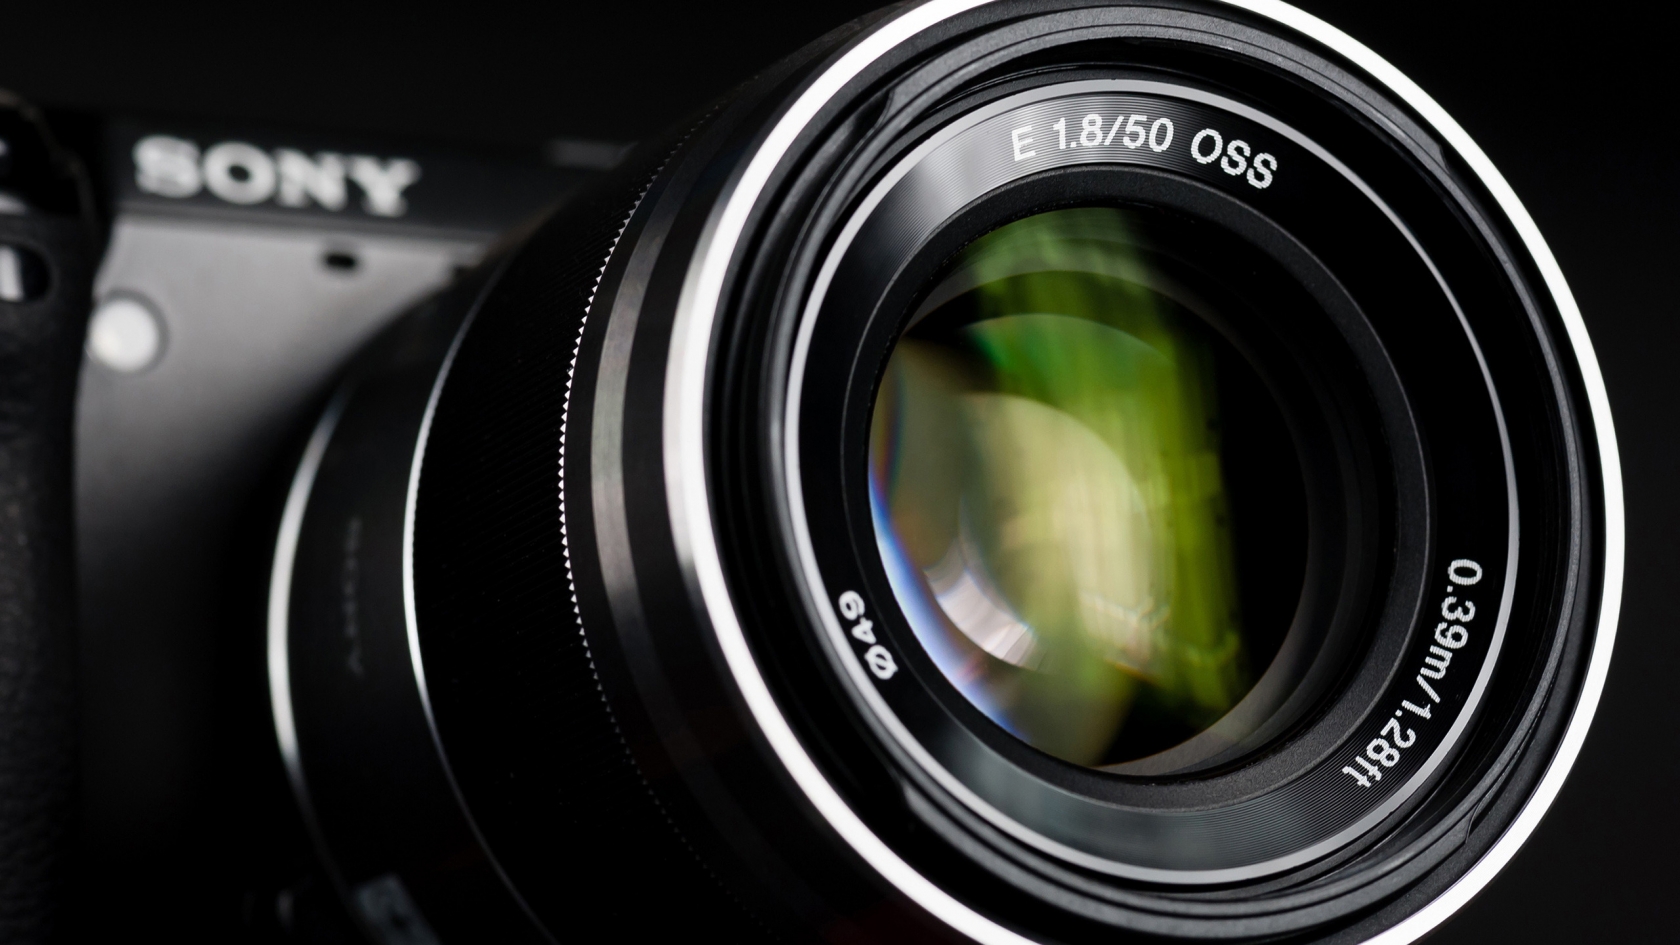 Sony Camera Lens for 1680 x 945 HDTV resolution